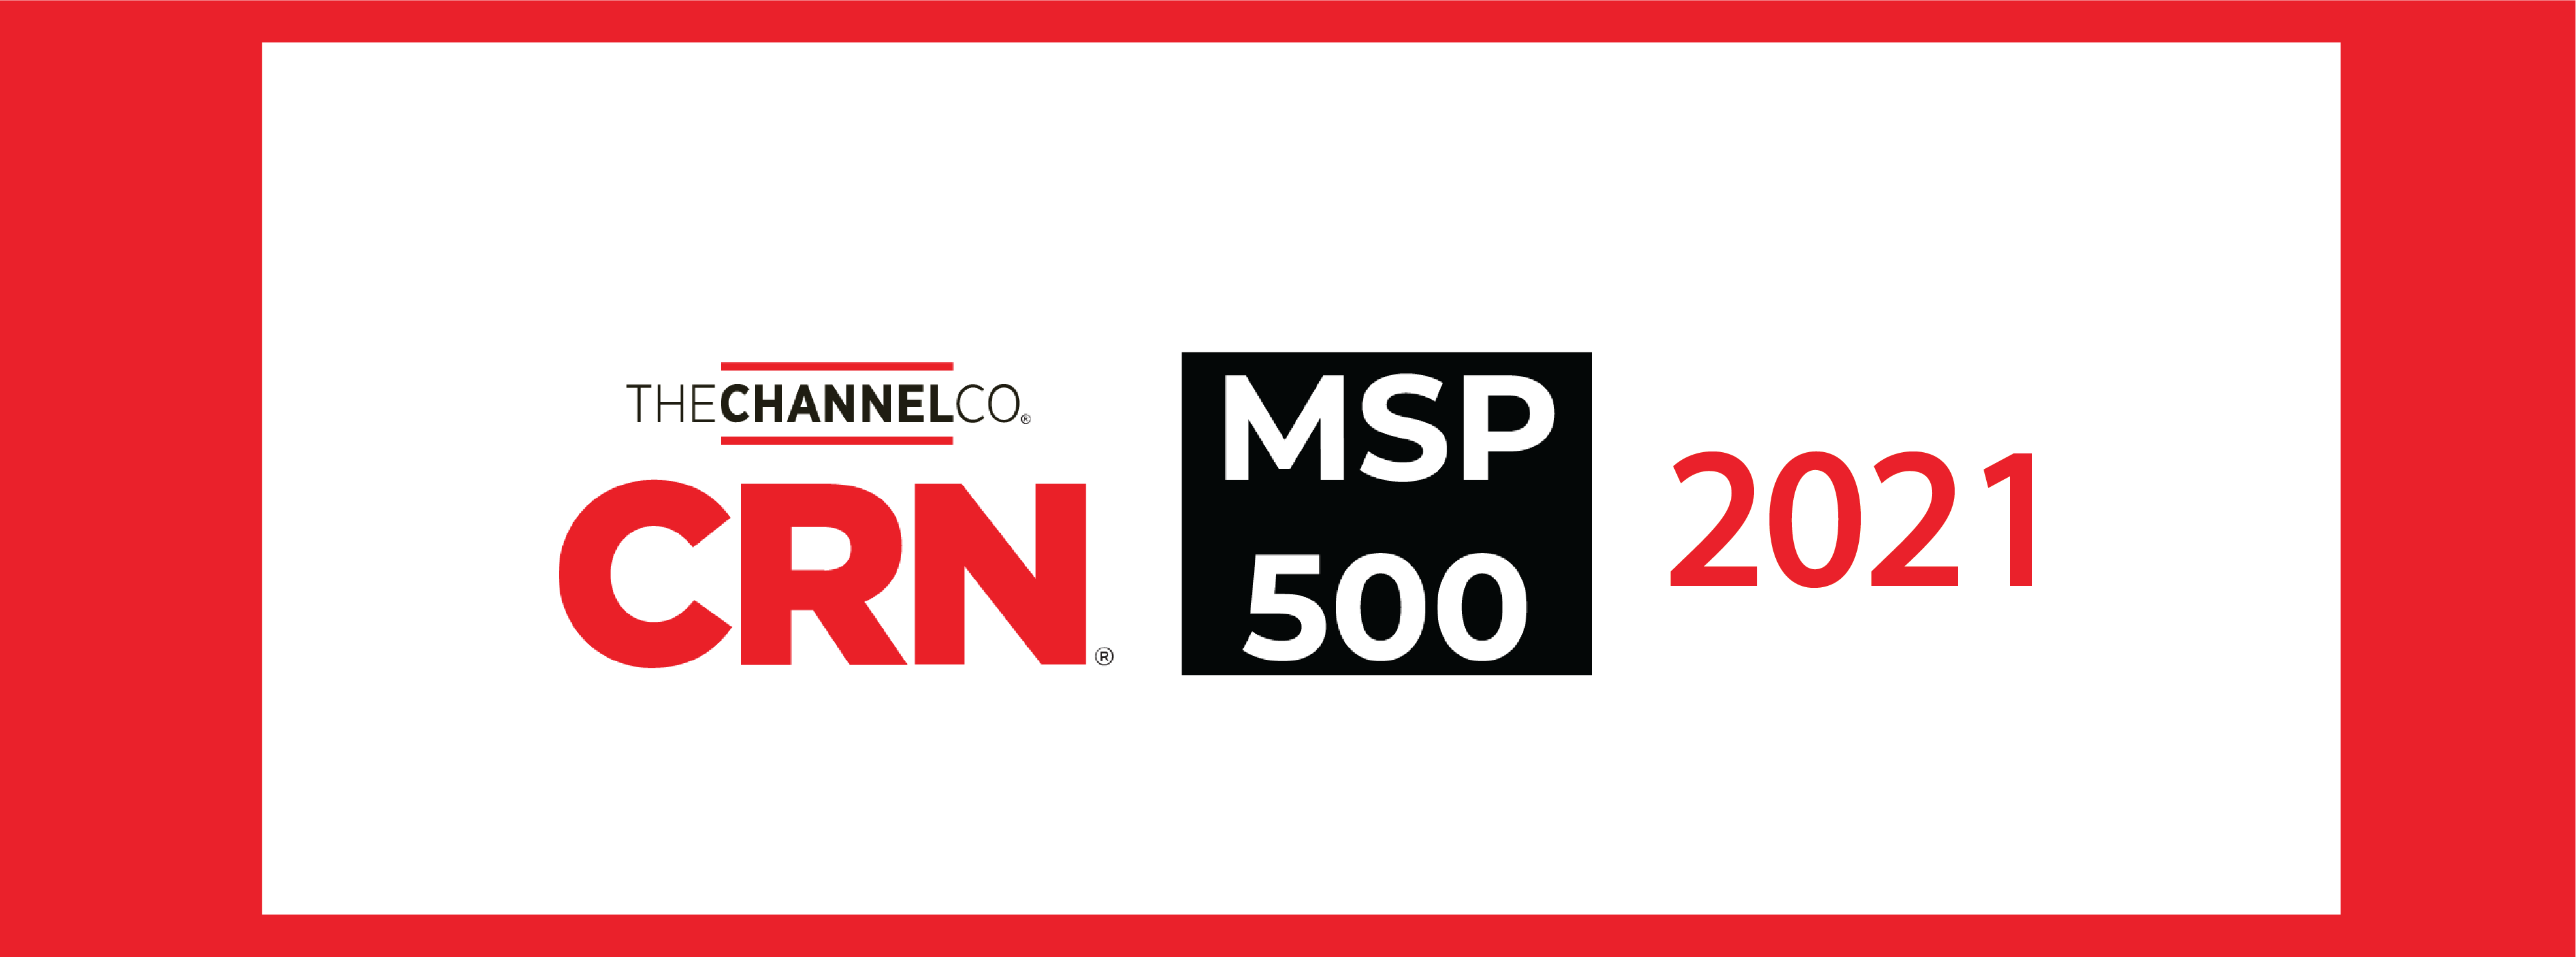 CRN's MSP 500 List of 2021